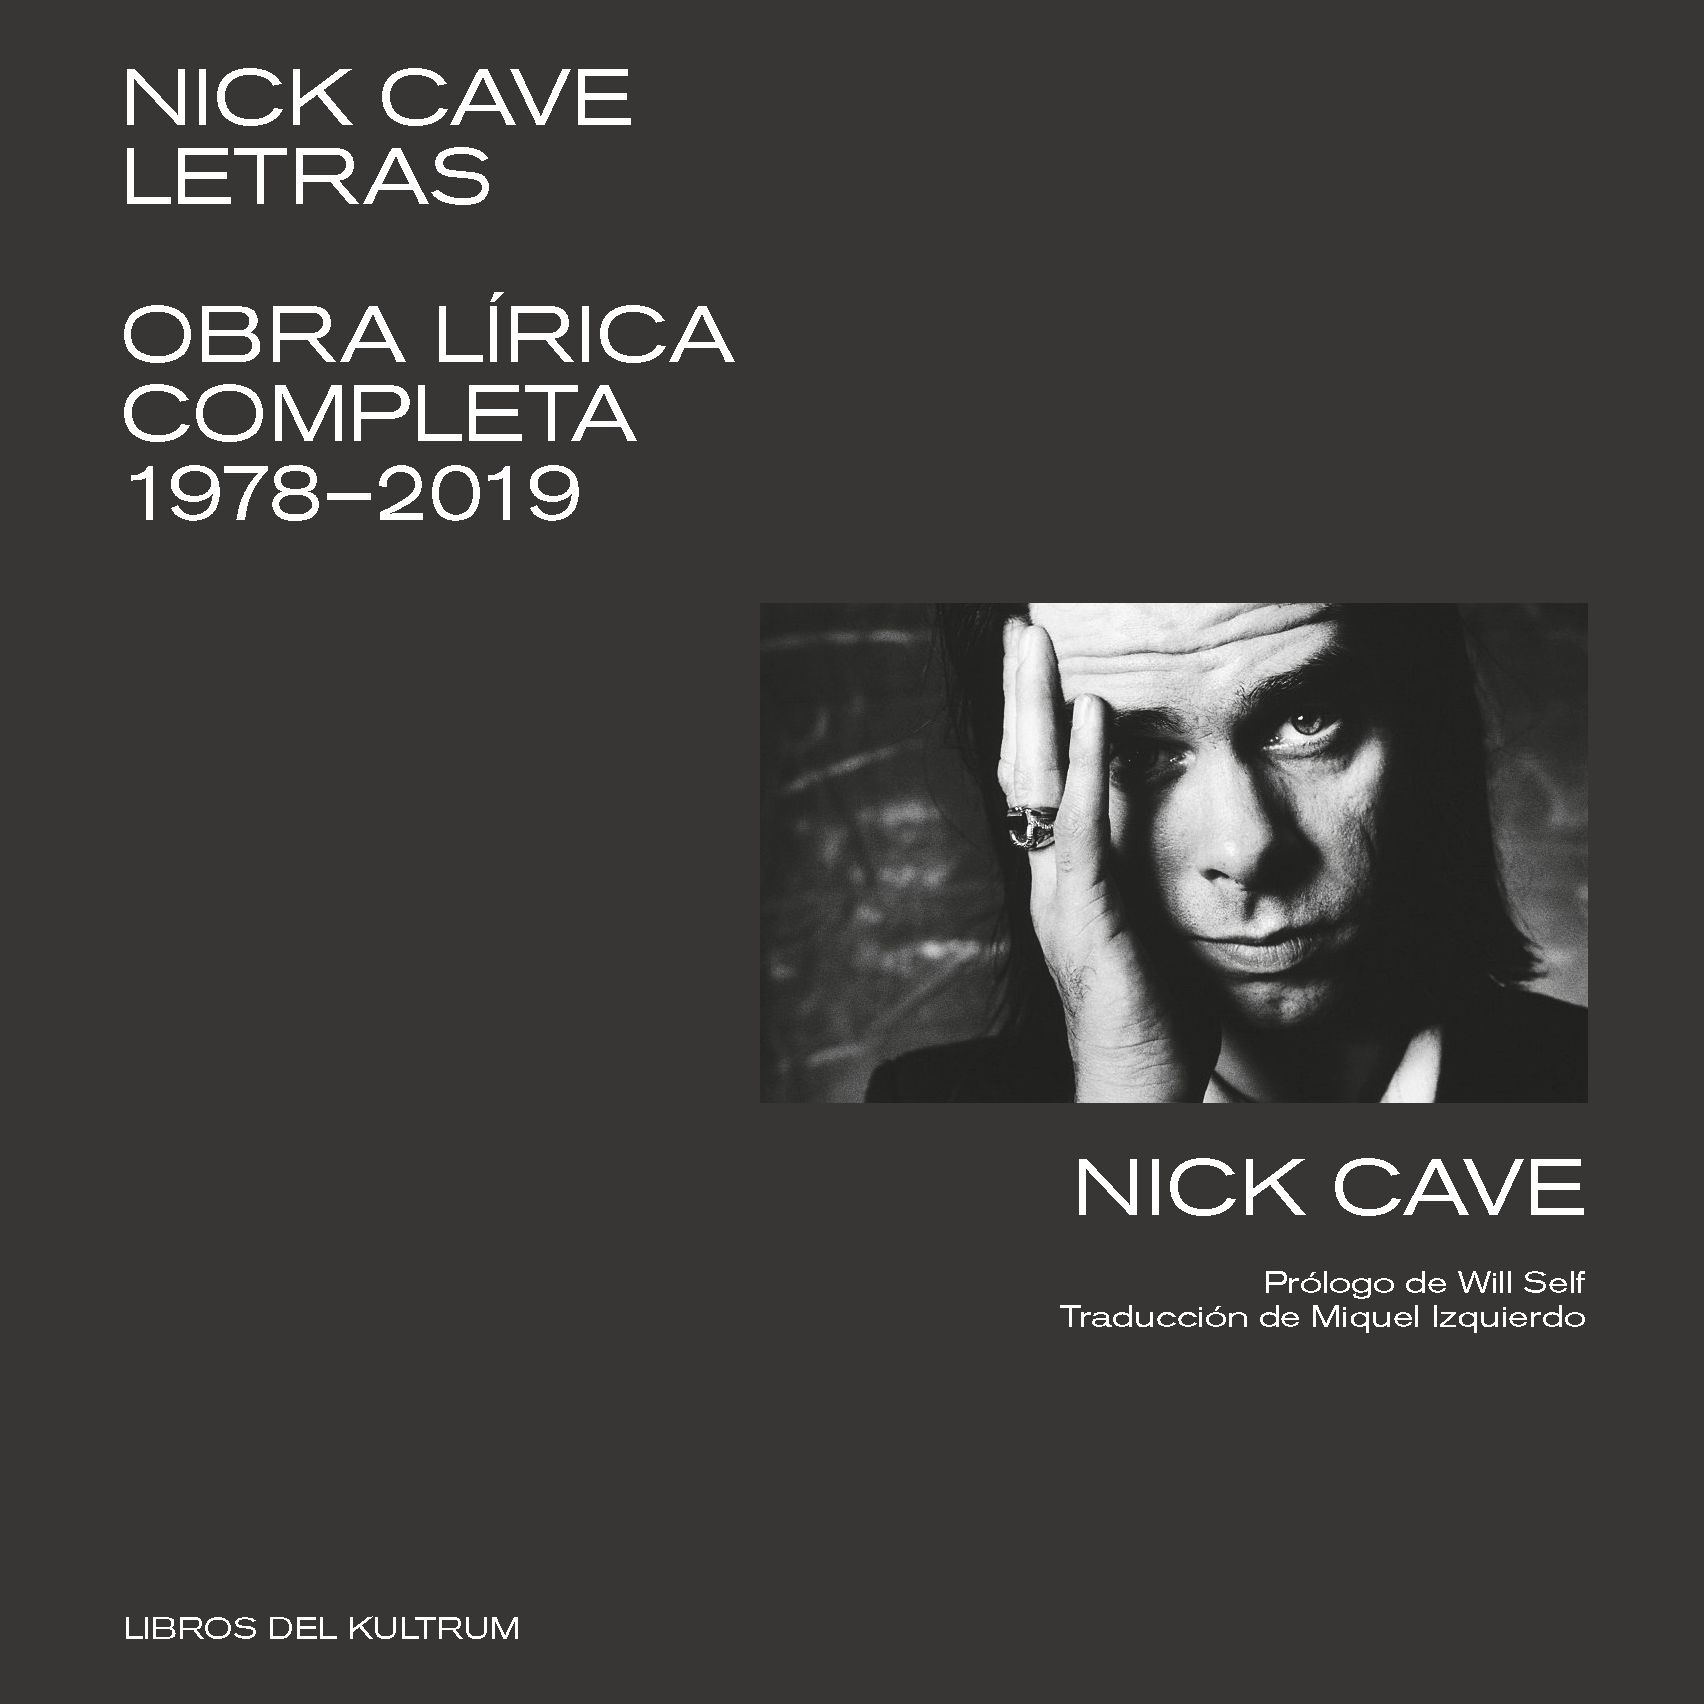 NICK CAVE. LETRAS. OBRA LÍRICA COMPLETA 1978-2019